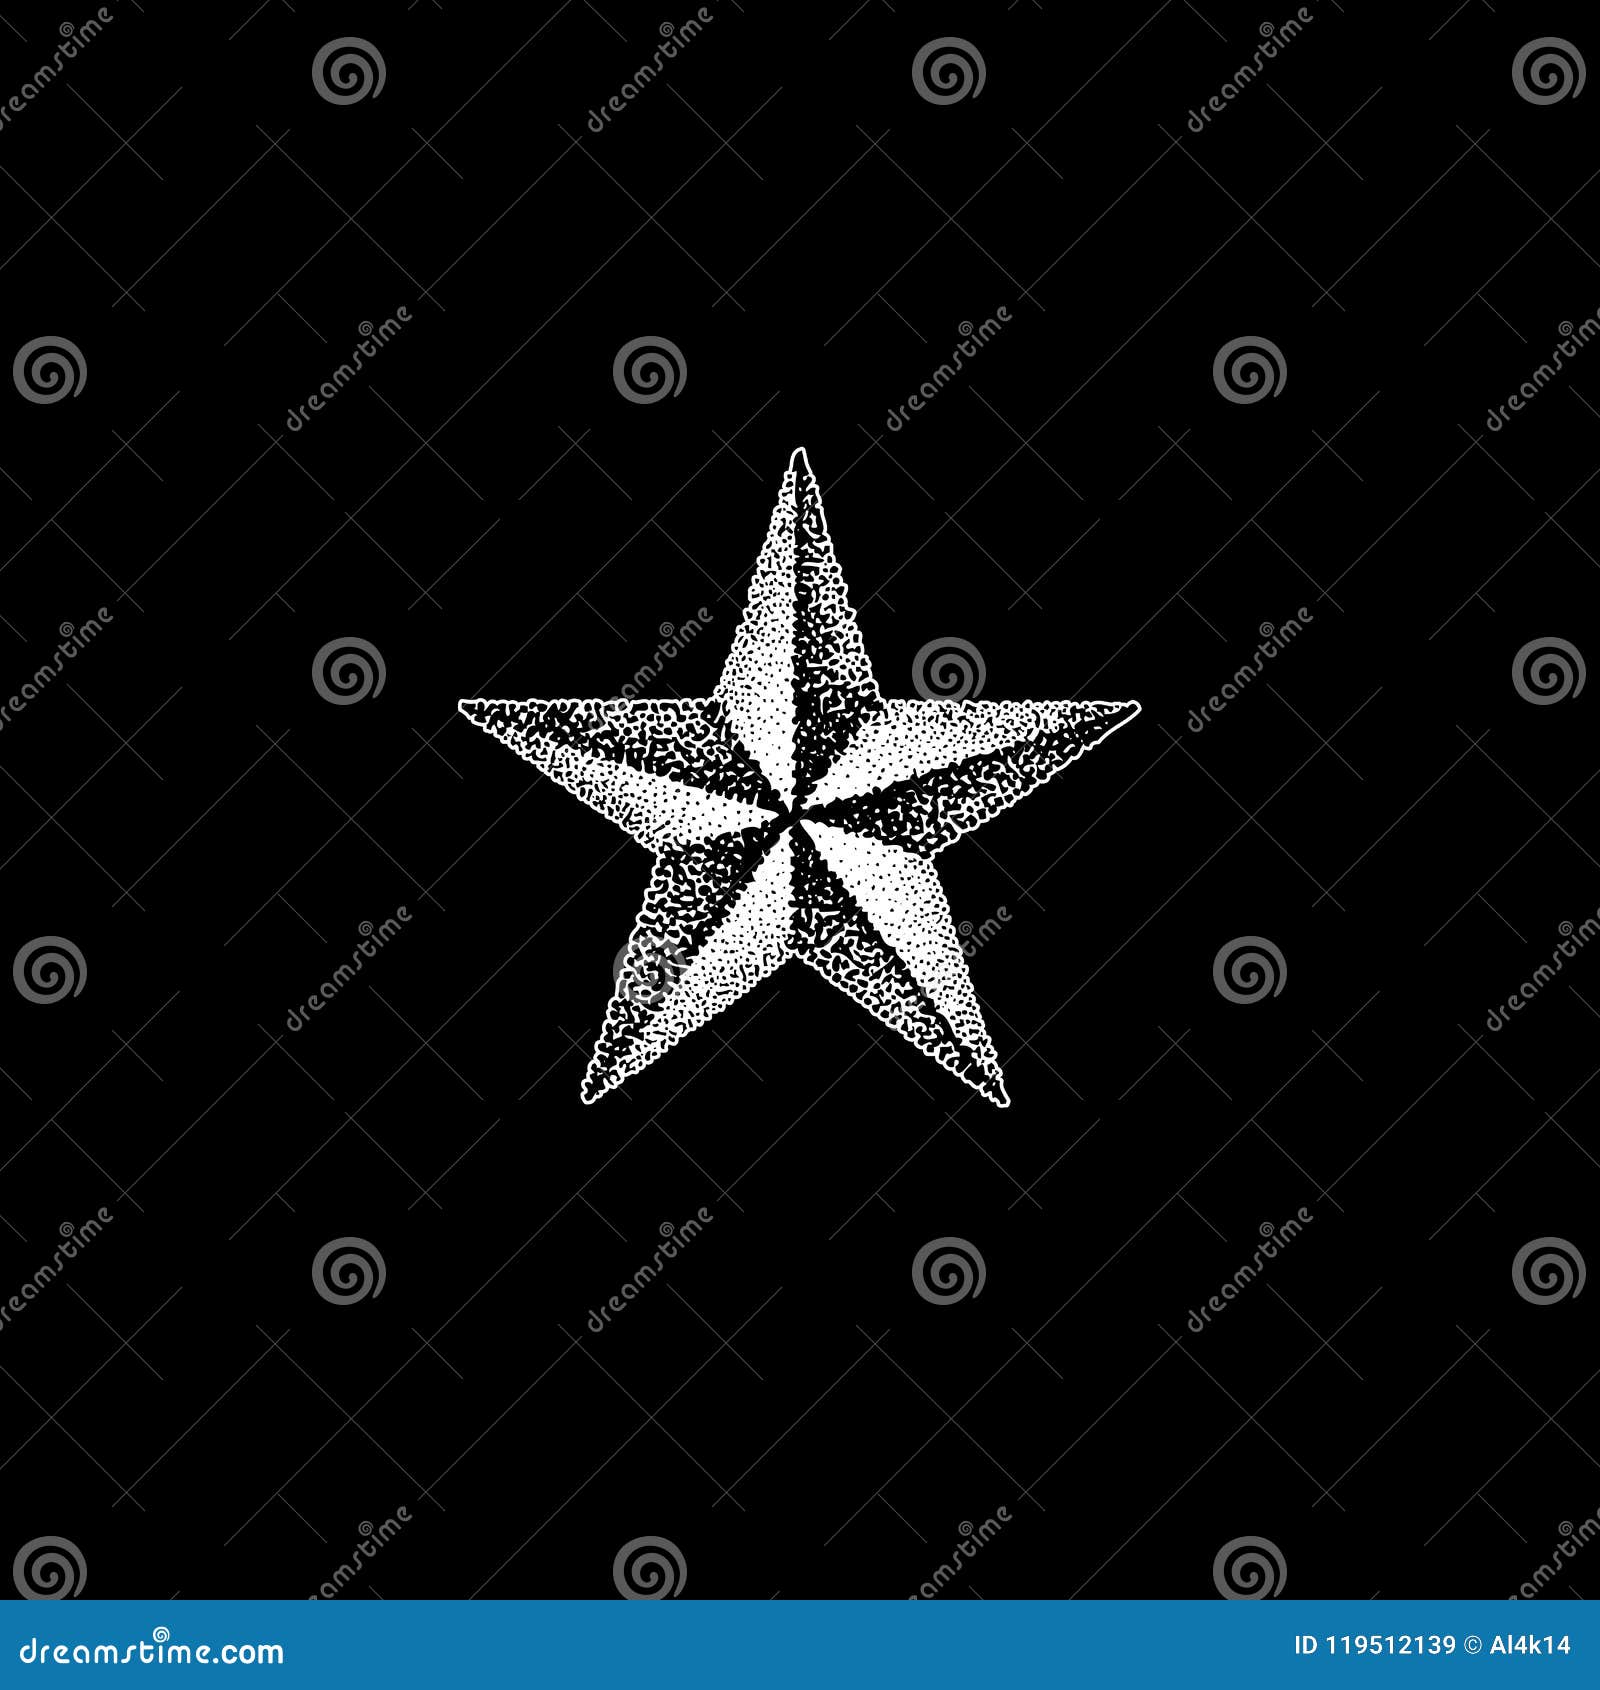 Hand Drawn Star Shape Illustration Stock Vector - Illustration of artist,  element: 119512139